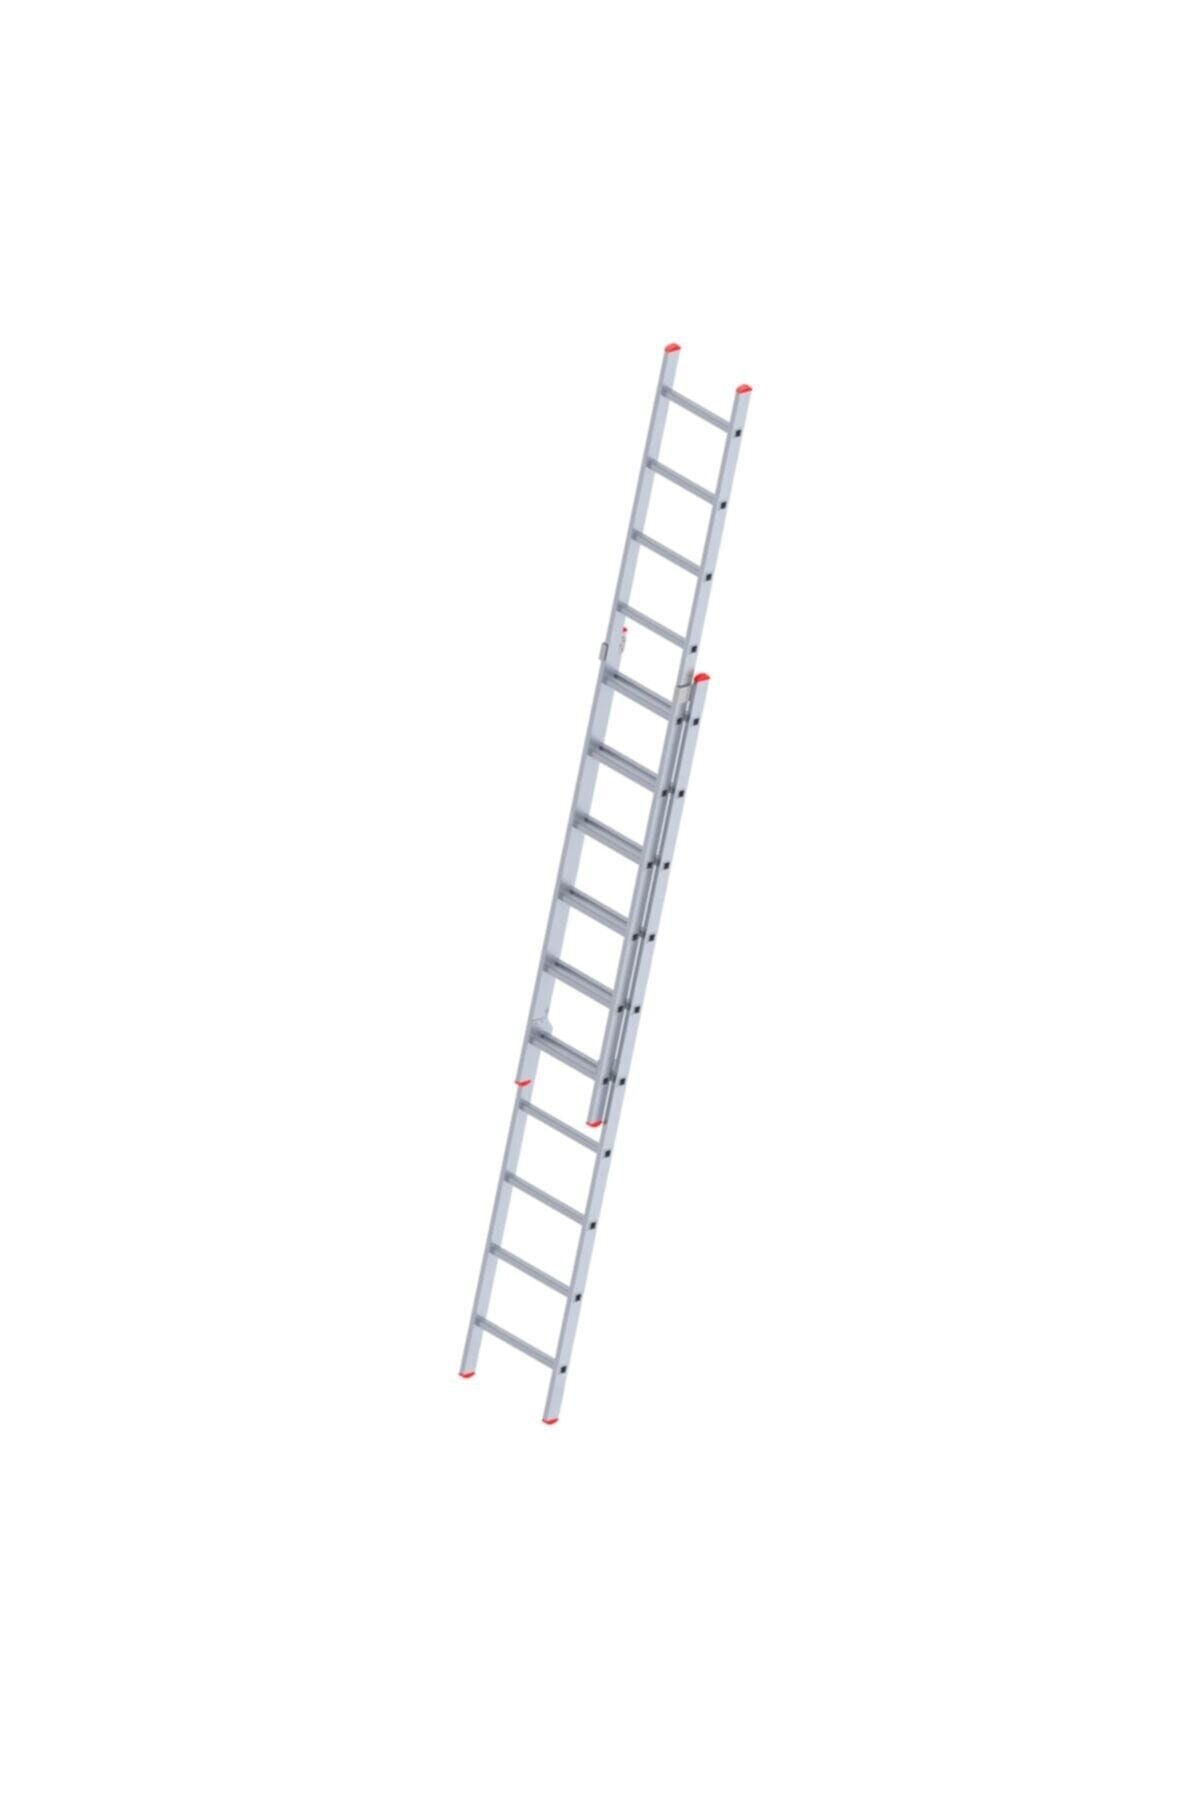 Sözbir Merdiven Sözbir 2x3 Toplam 6 Metre Endüstriyel Alüminyum Sürgülü Merdiven